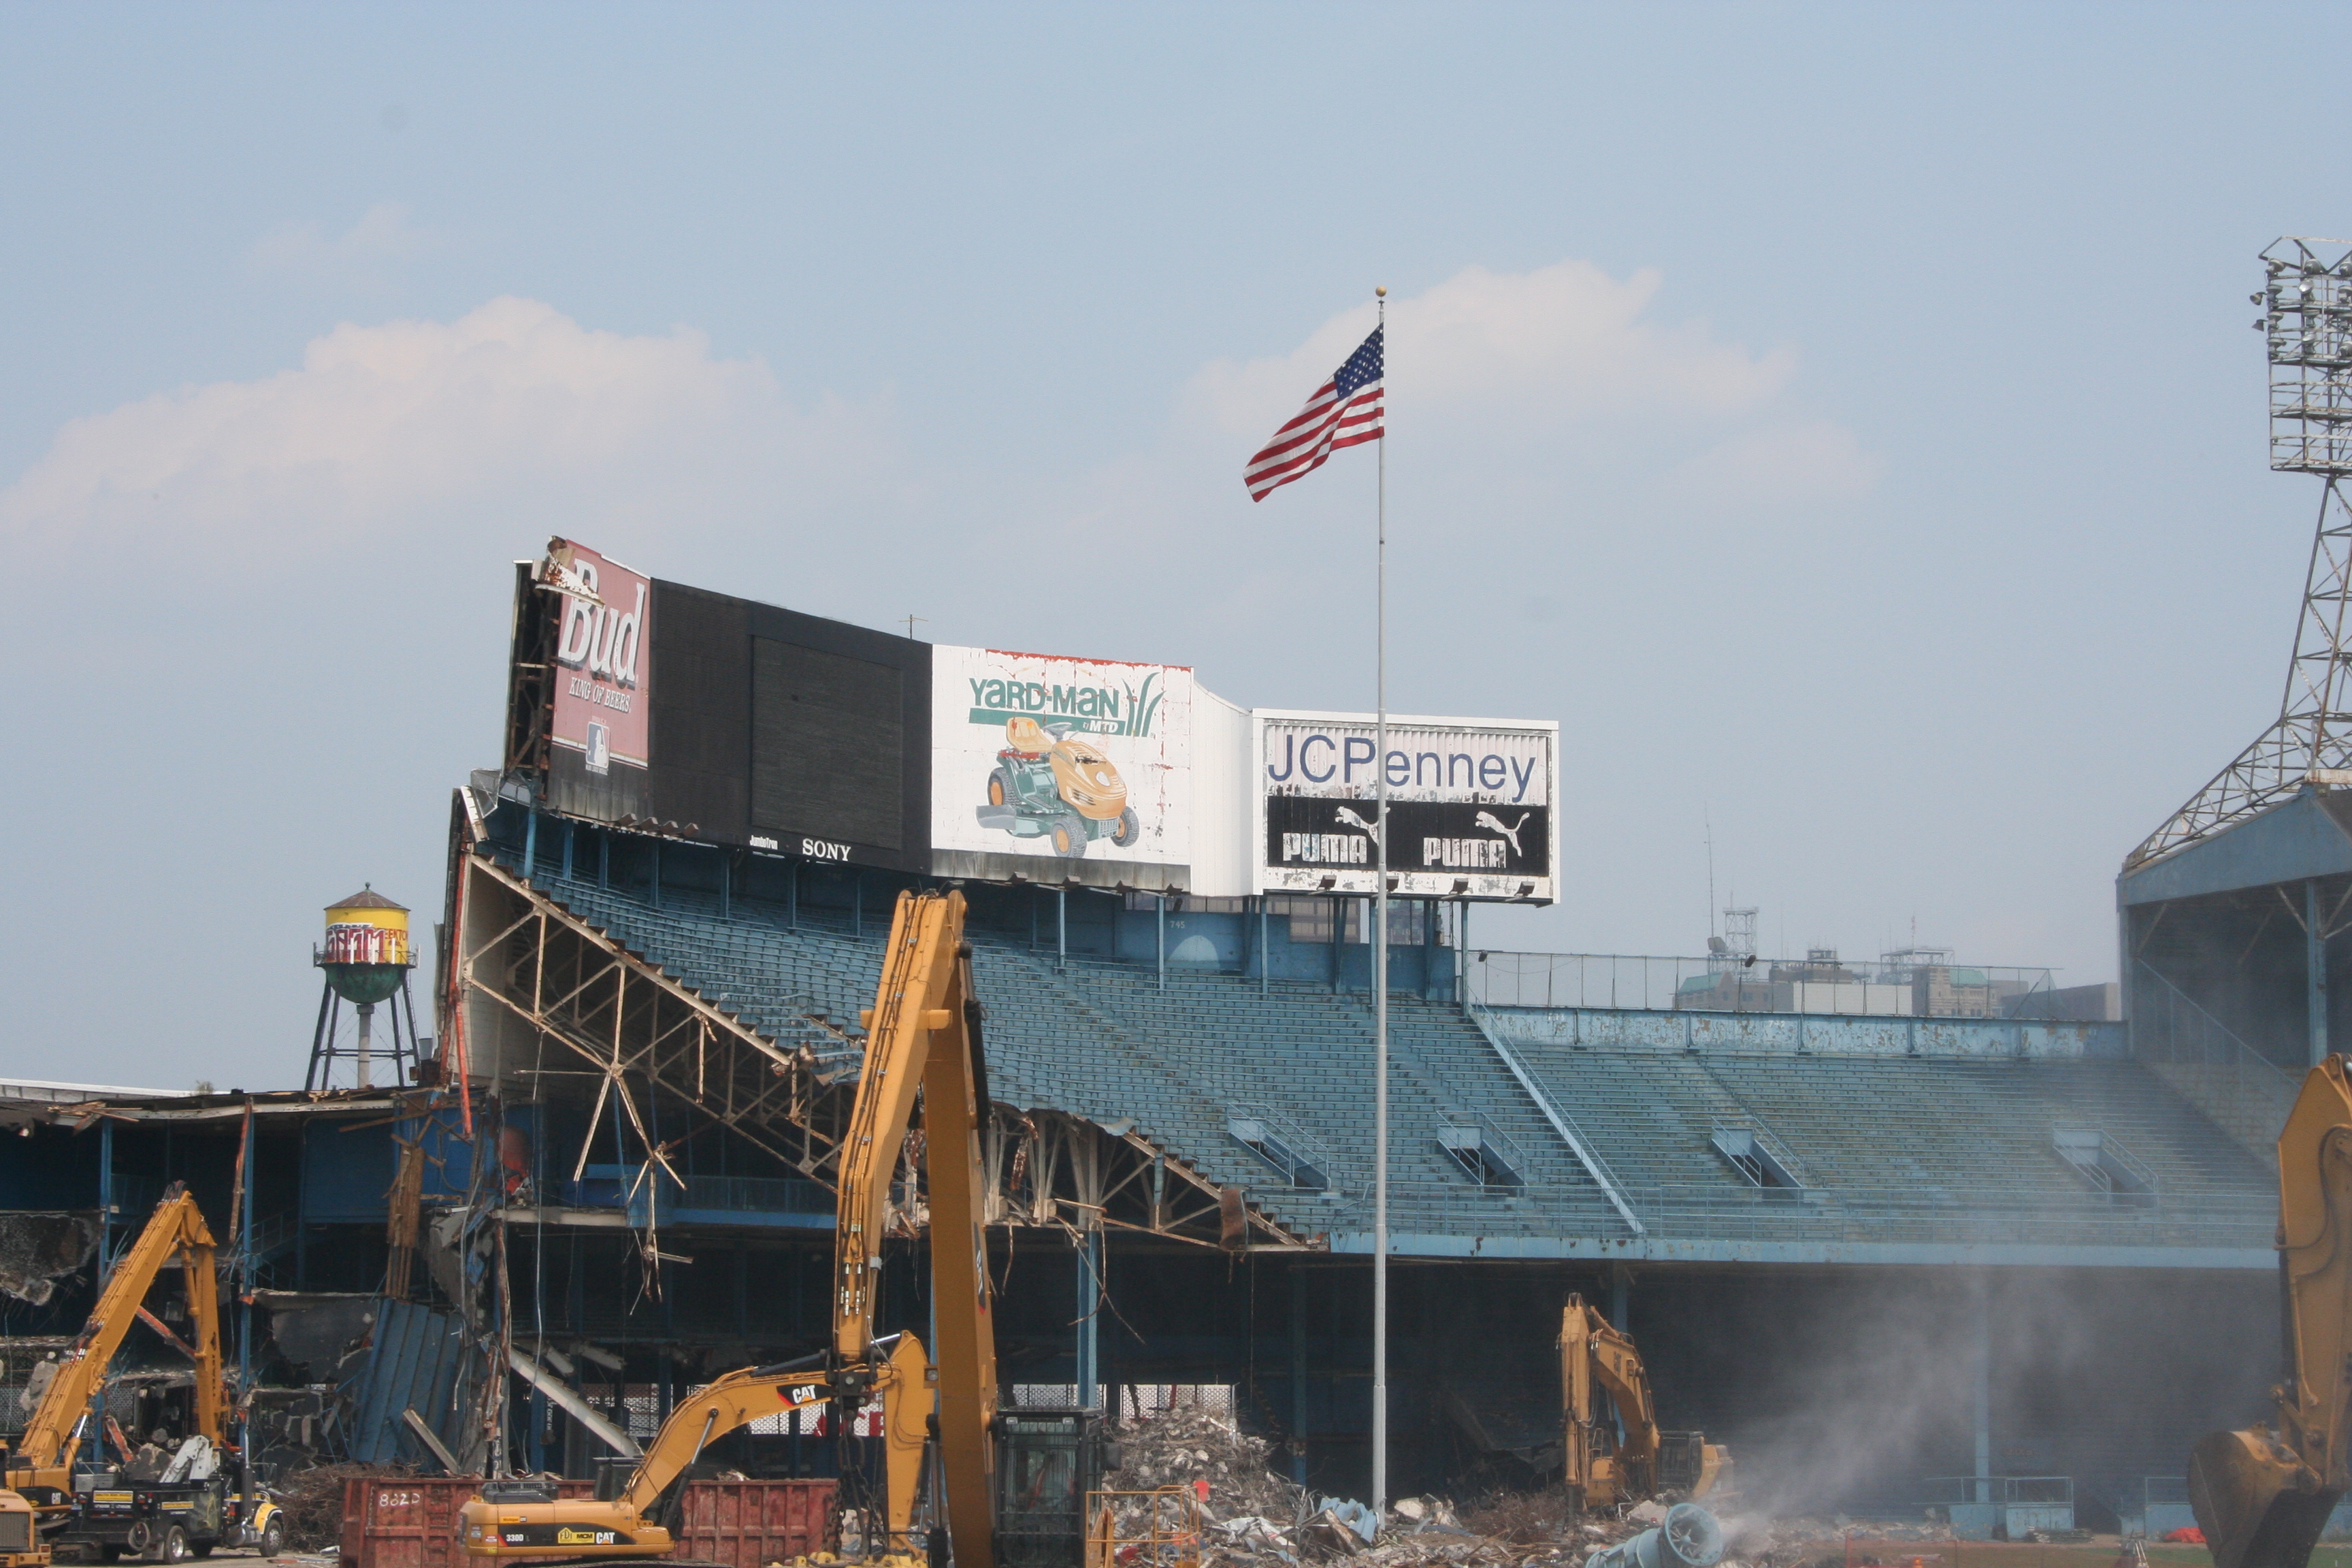 File:Tiger stadium demolition.jpg - Wikipedia